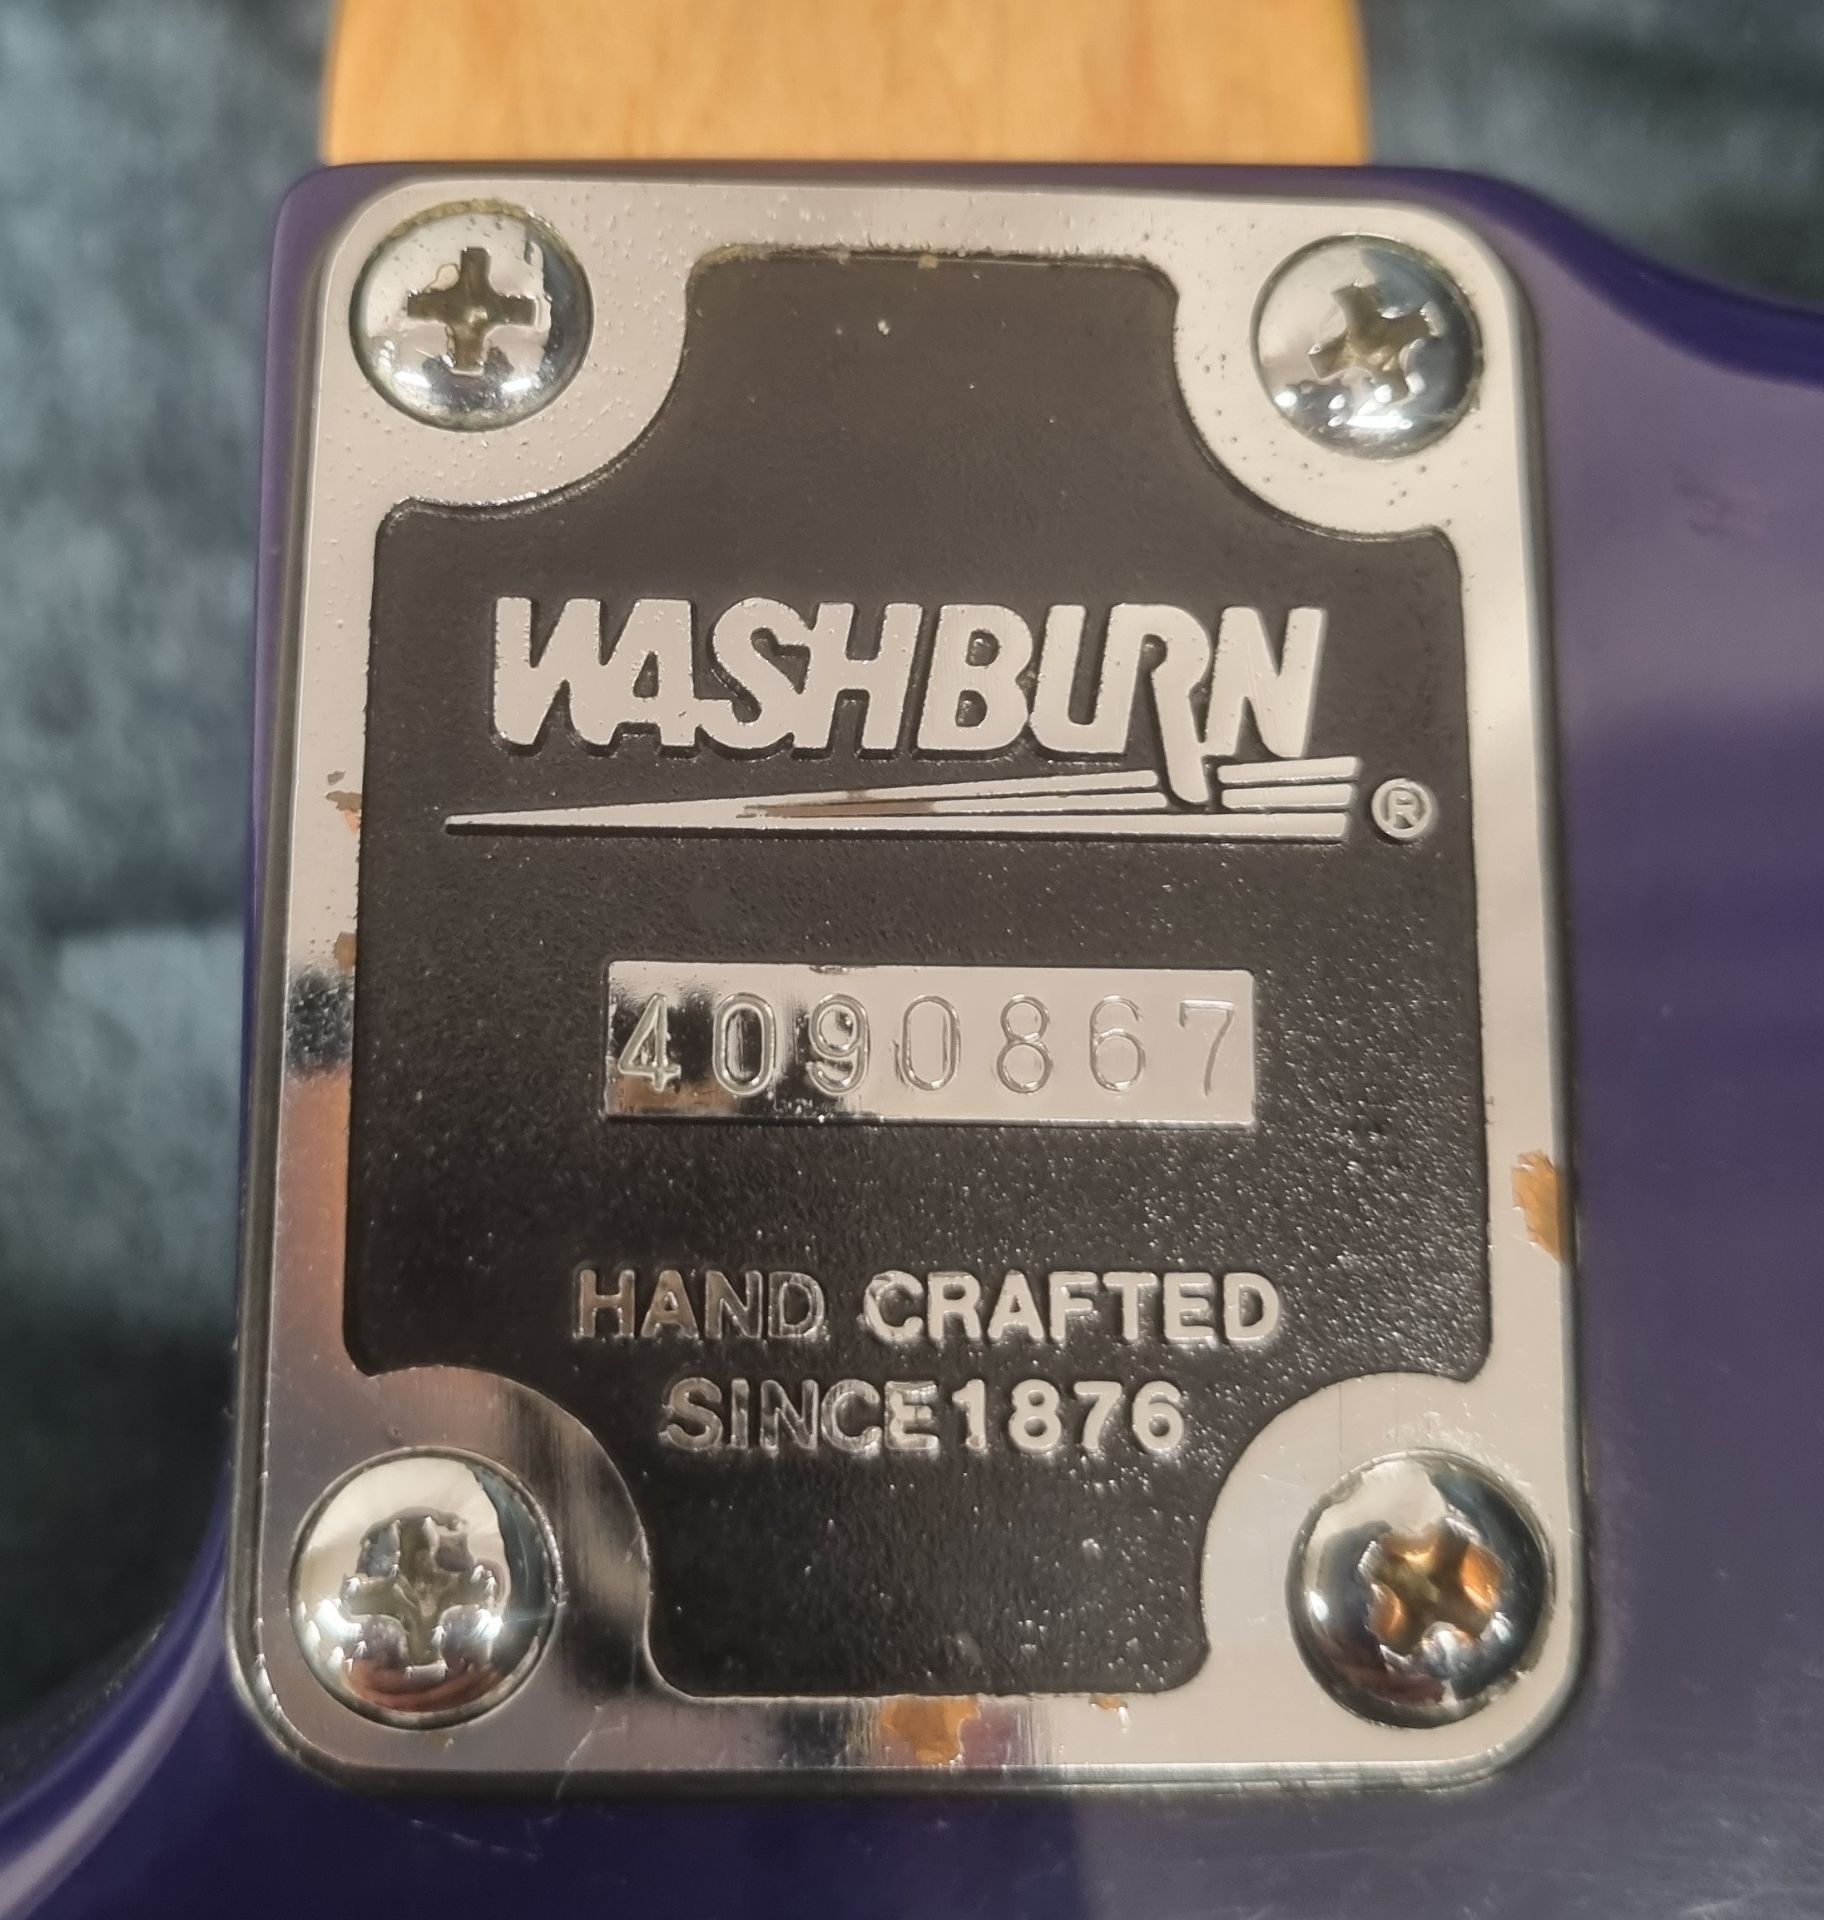 Washburn 4090867 Electric guitar & case - Image 8 of 11